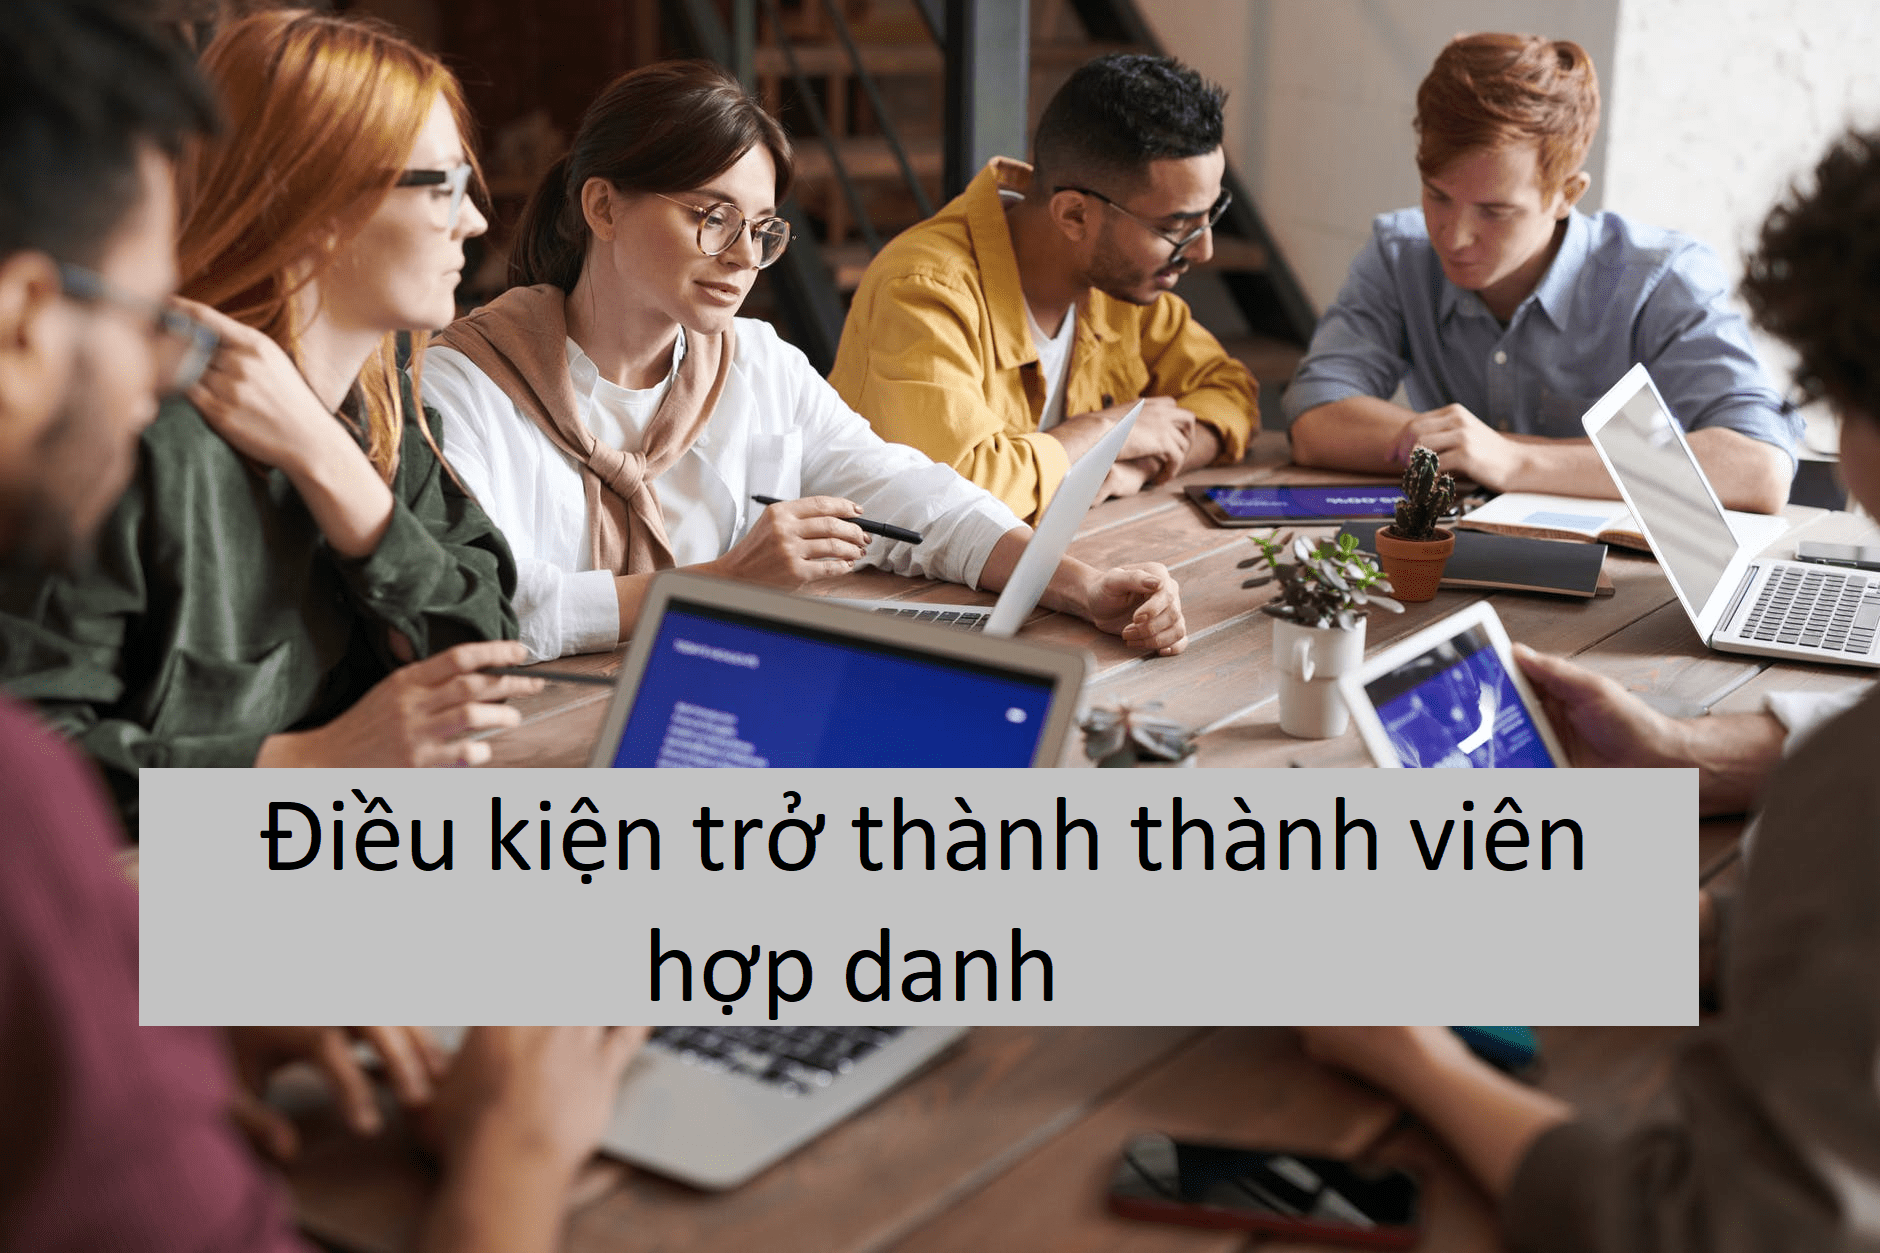 Thanh Vien Hop Danh